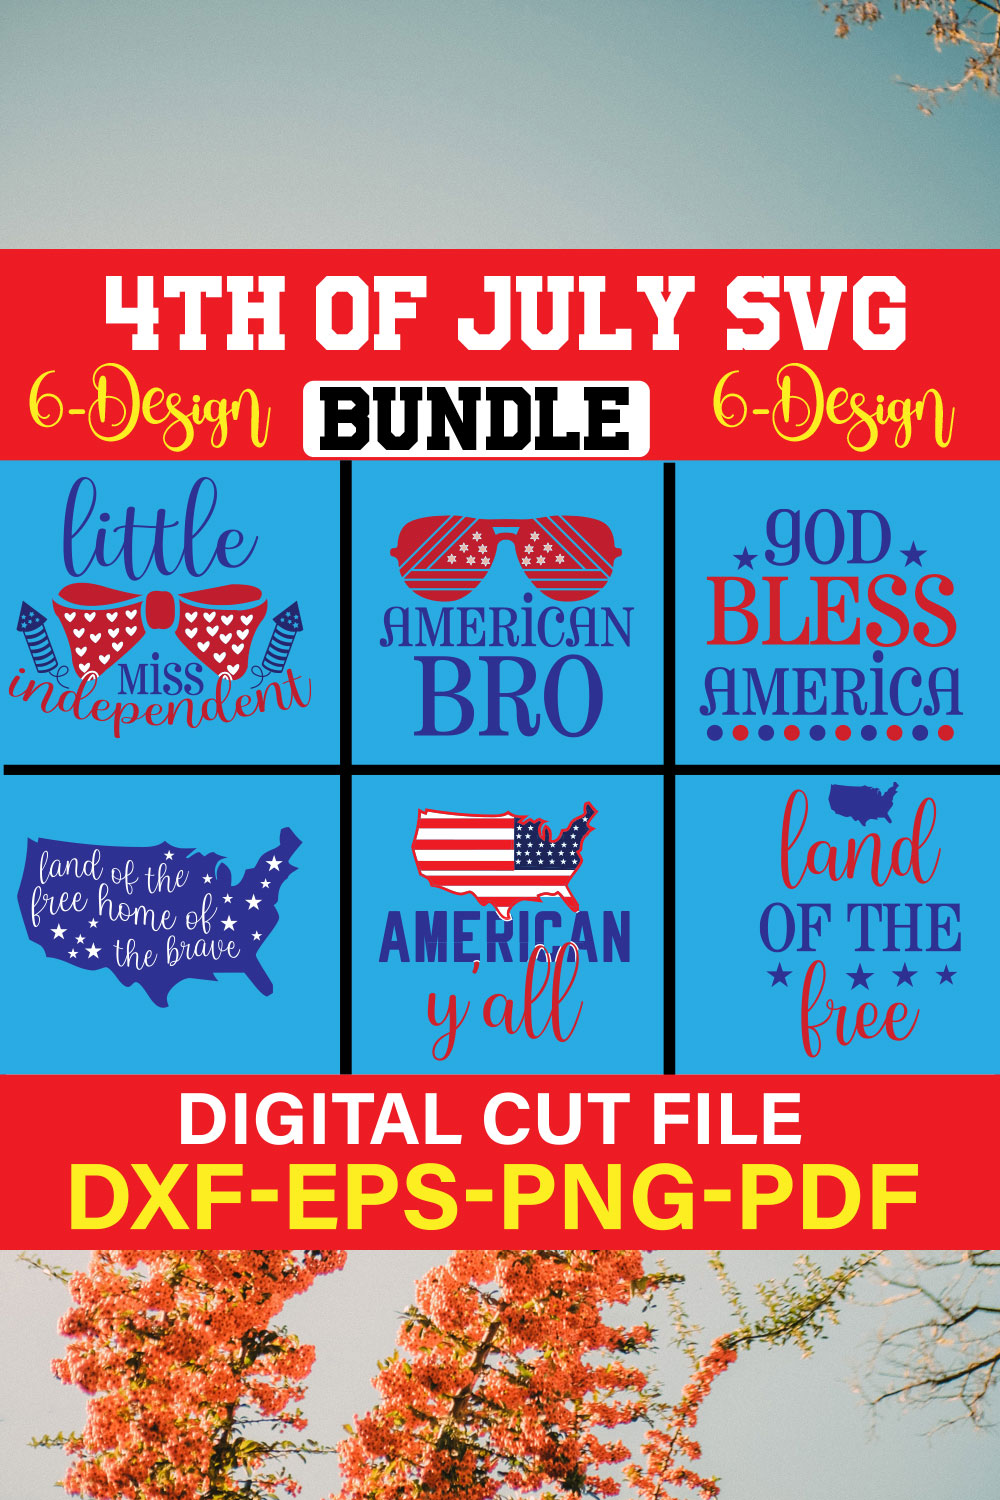 4th of July SVG Bundle Vol-3 pinterest preview image.